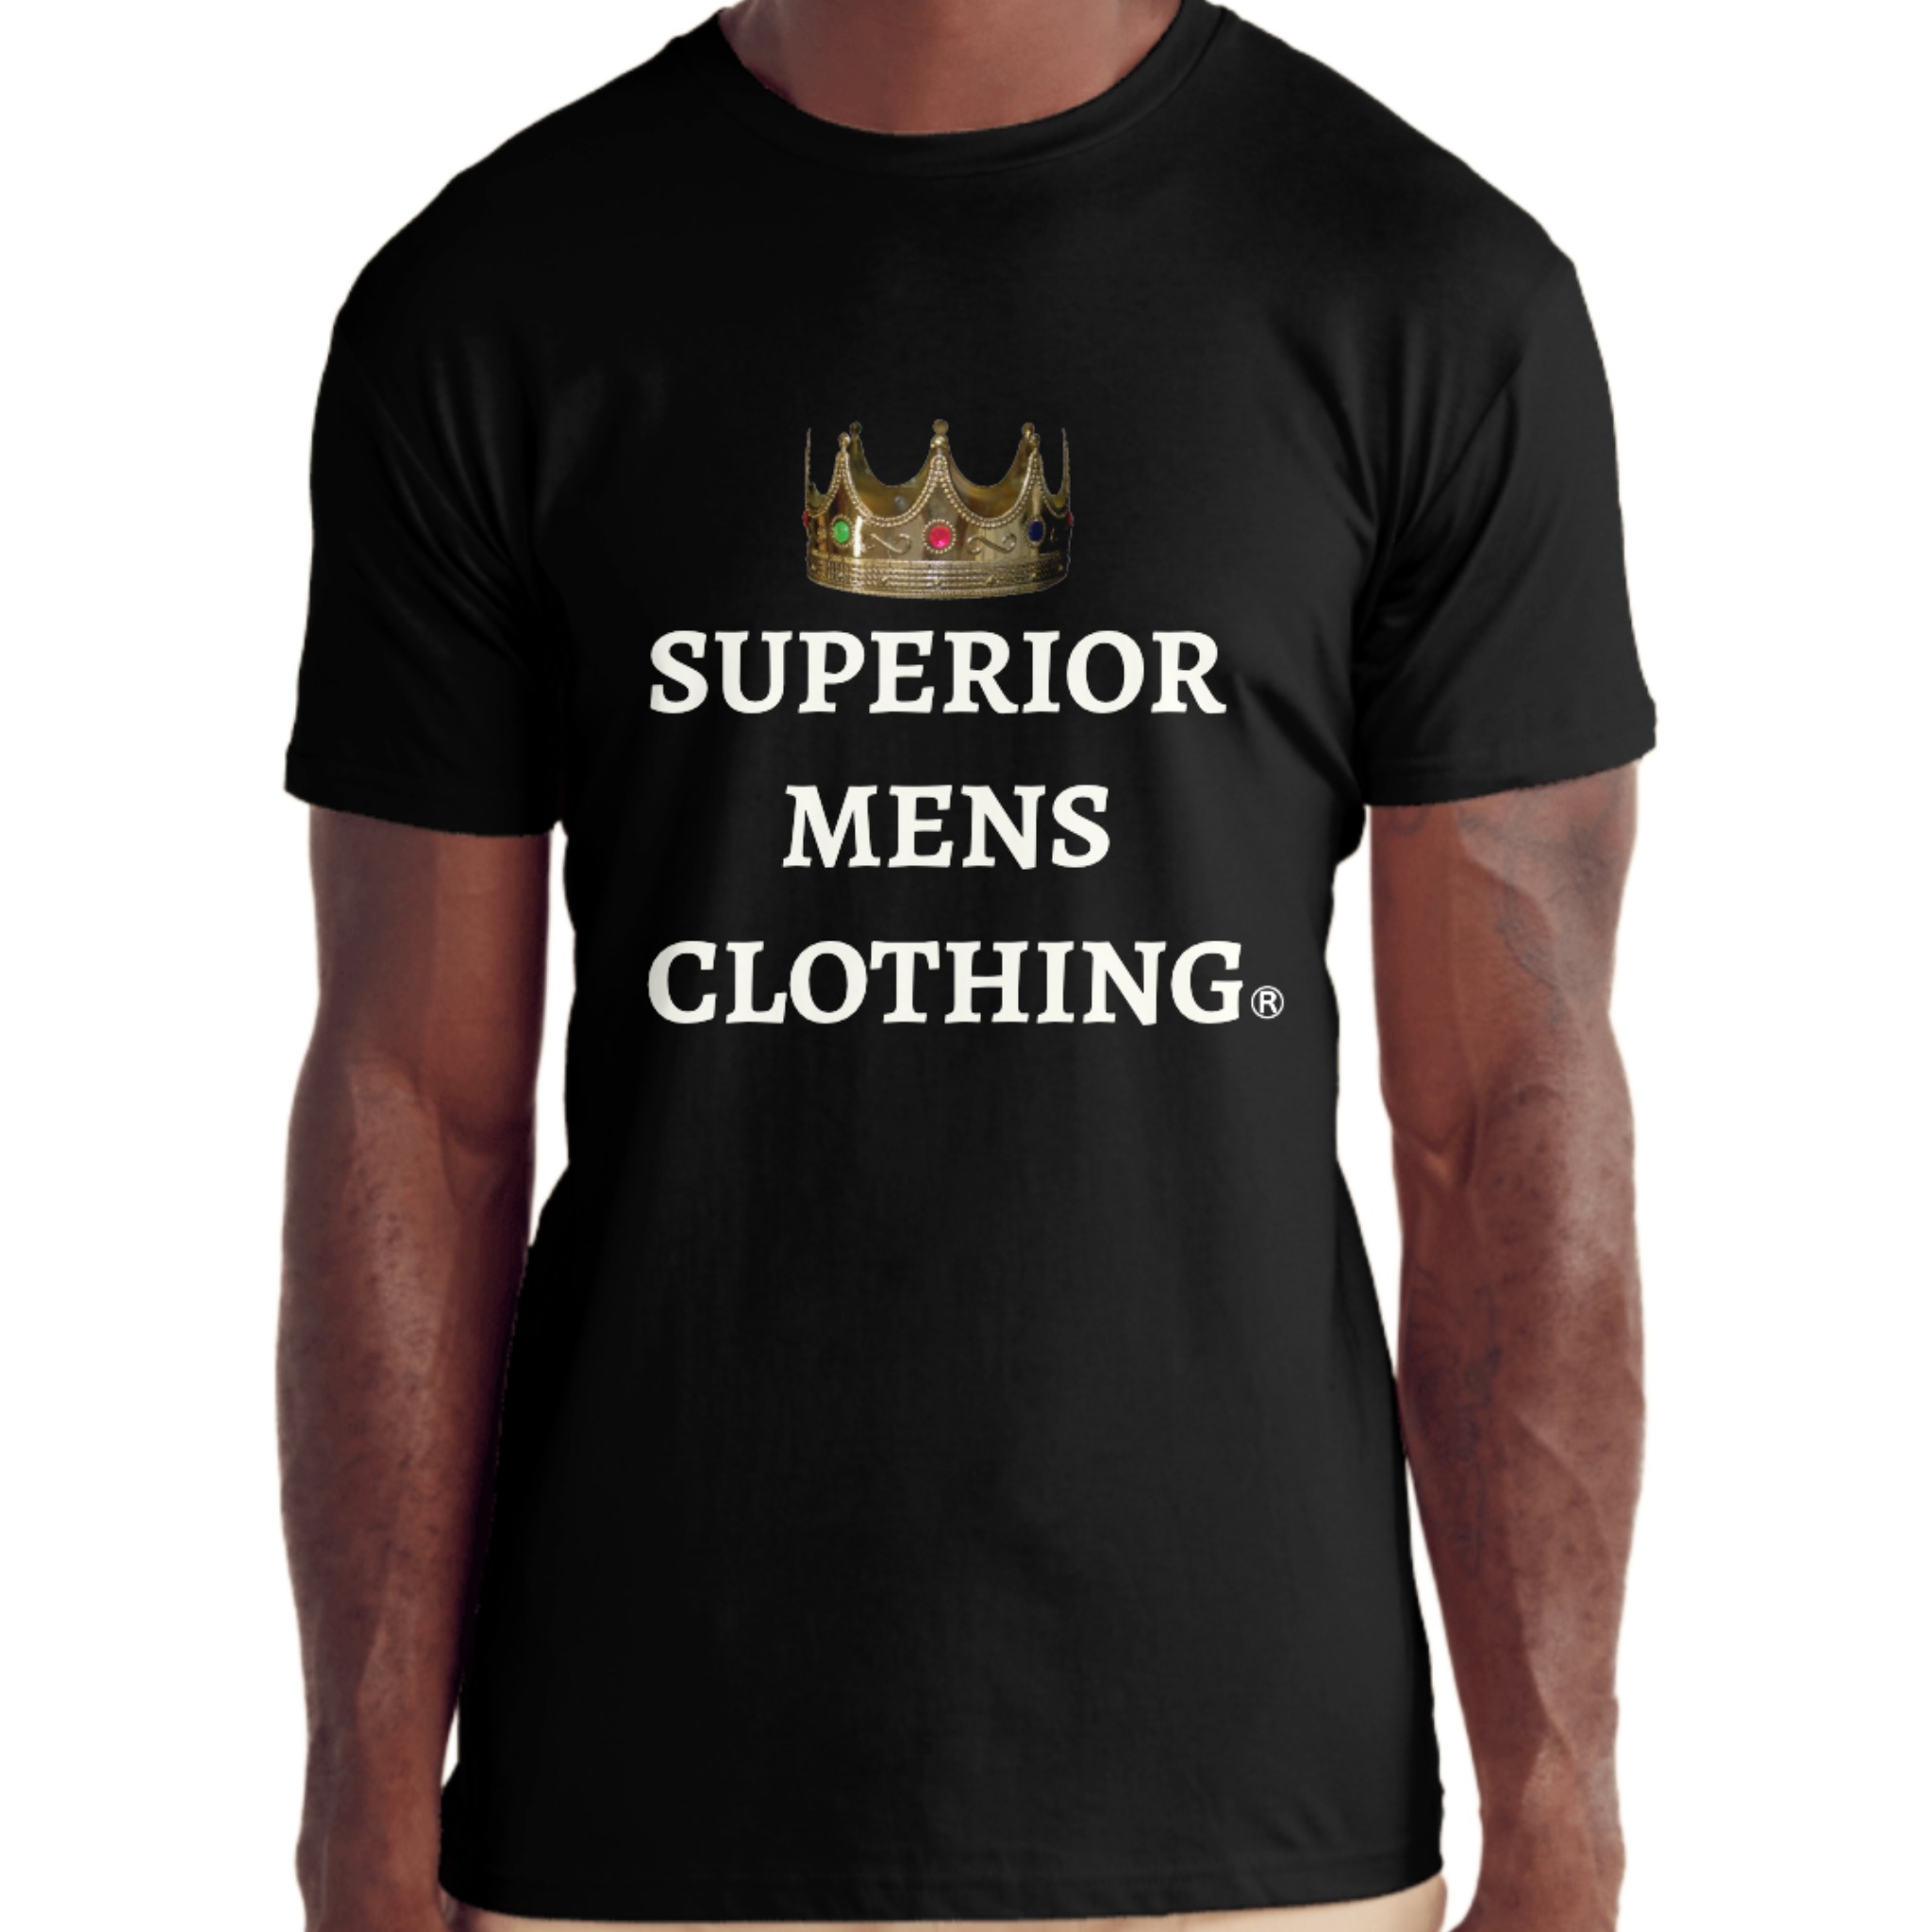 Superior Men's Clothing T-Shirt